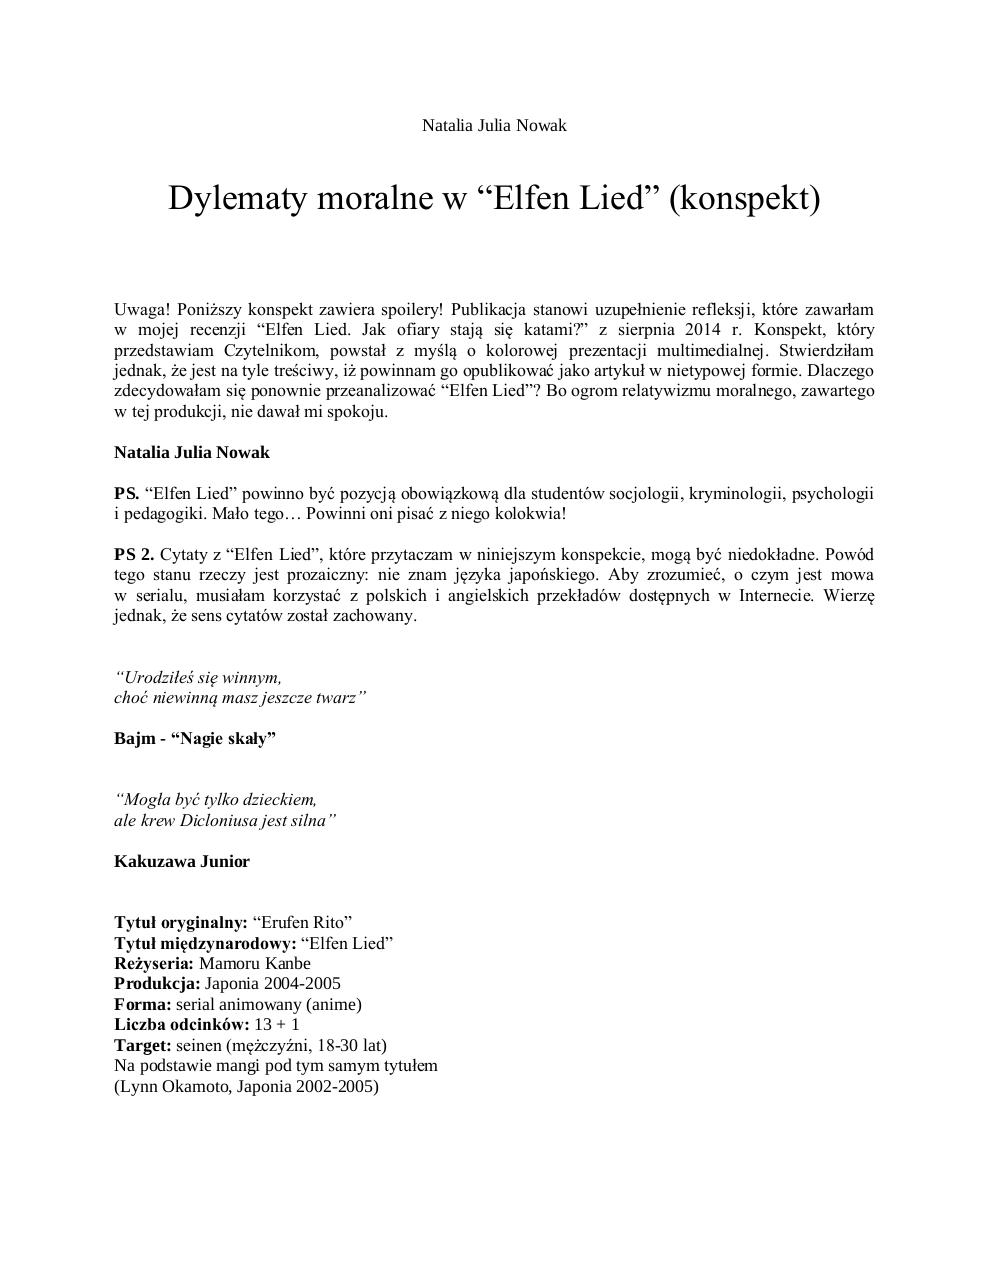 Dylematy moralne w ''Elfen Lied'' - konspekt.pdf - page 1/8